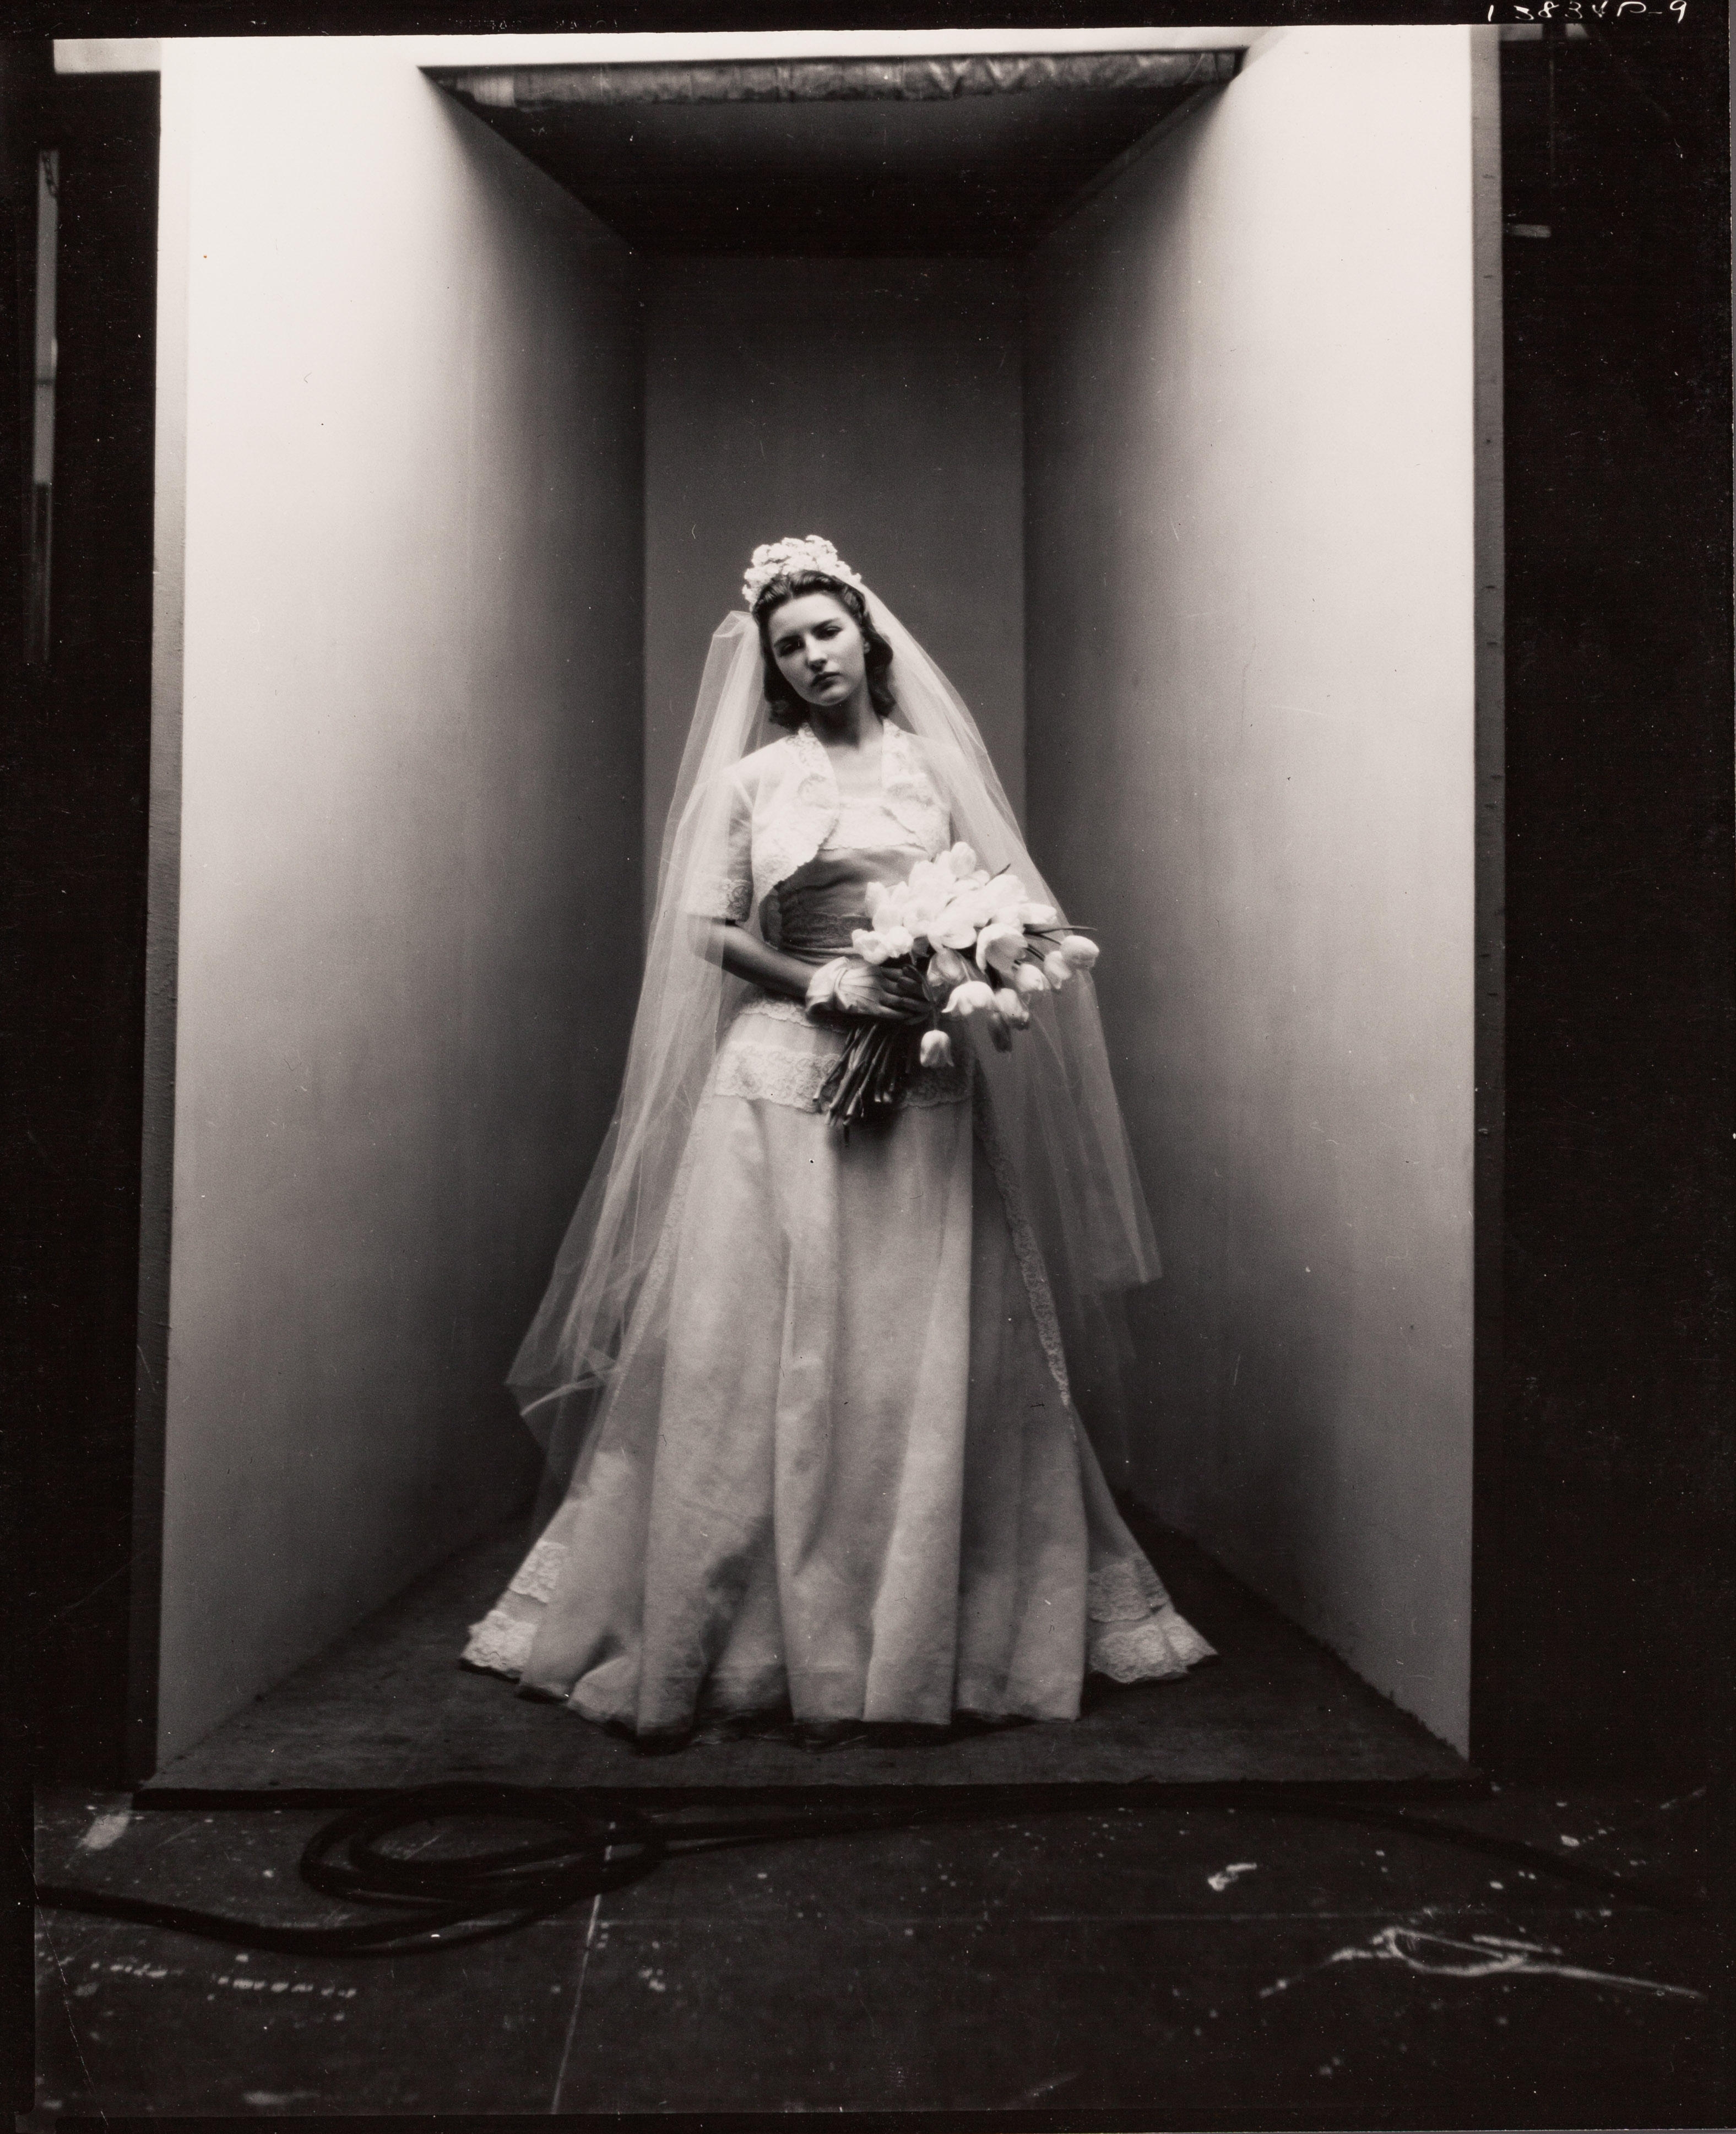 Mrs. Amory Carhart, New York by Irving Penn, 1947